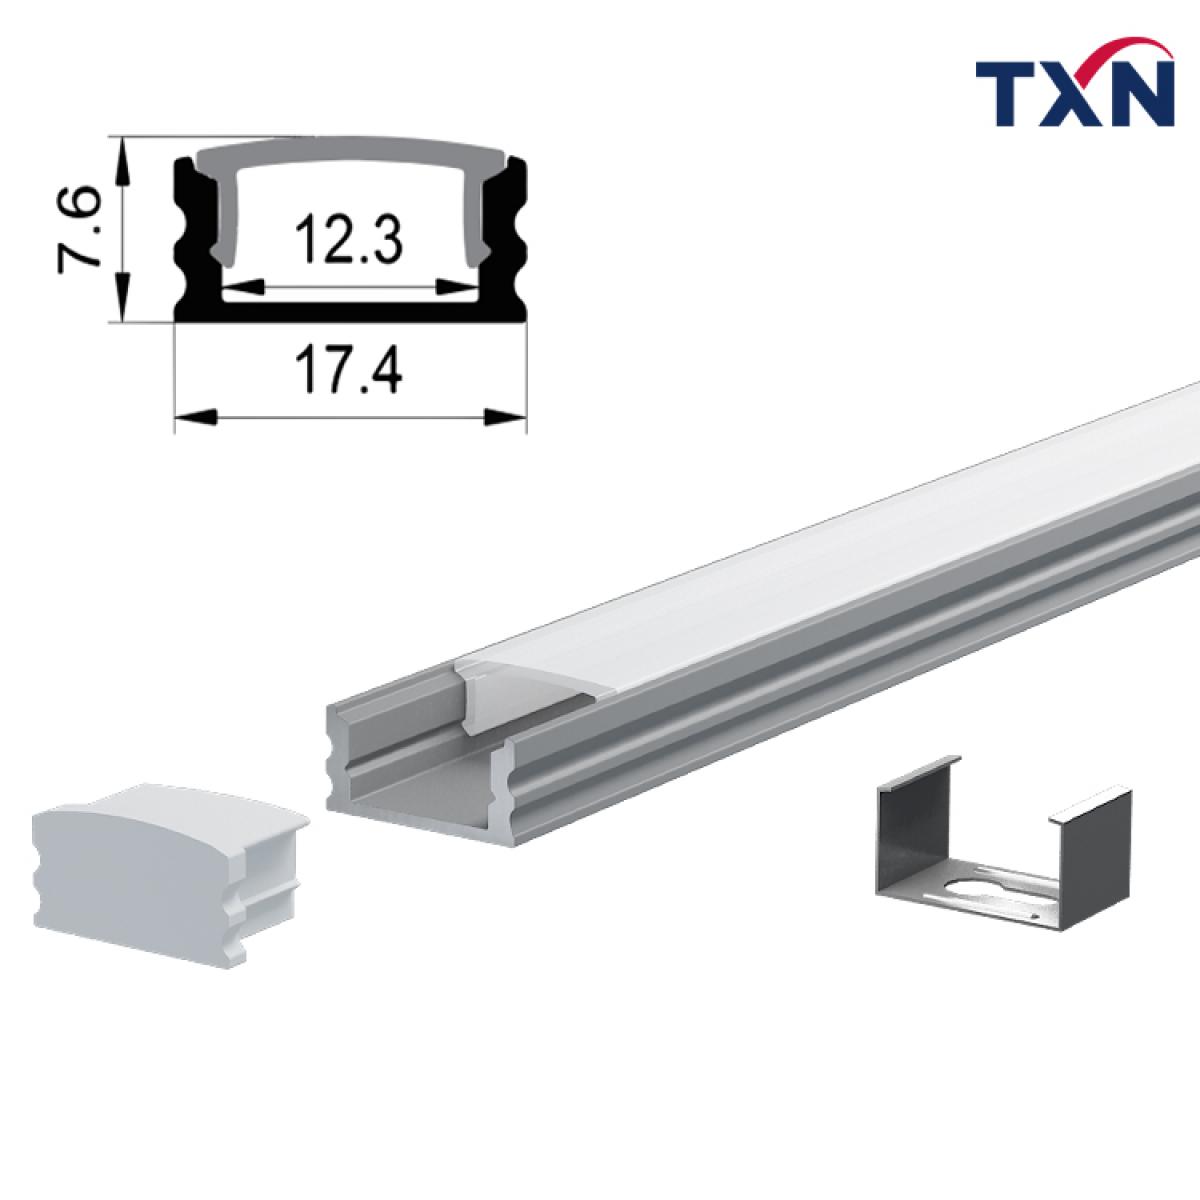 TXN-1707 Hot-selling LED Aluminium Profiles From TXN LED Lighting